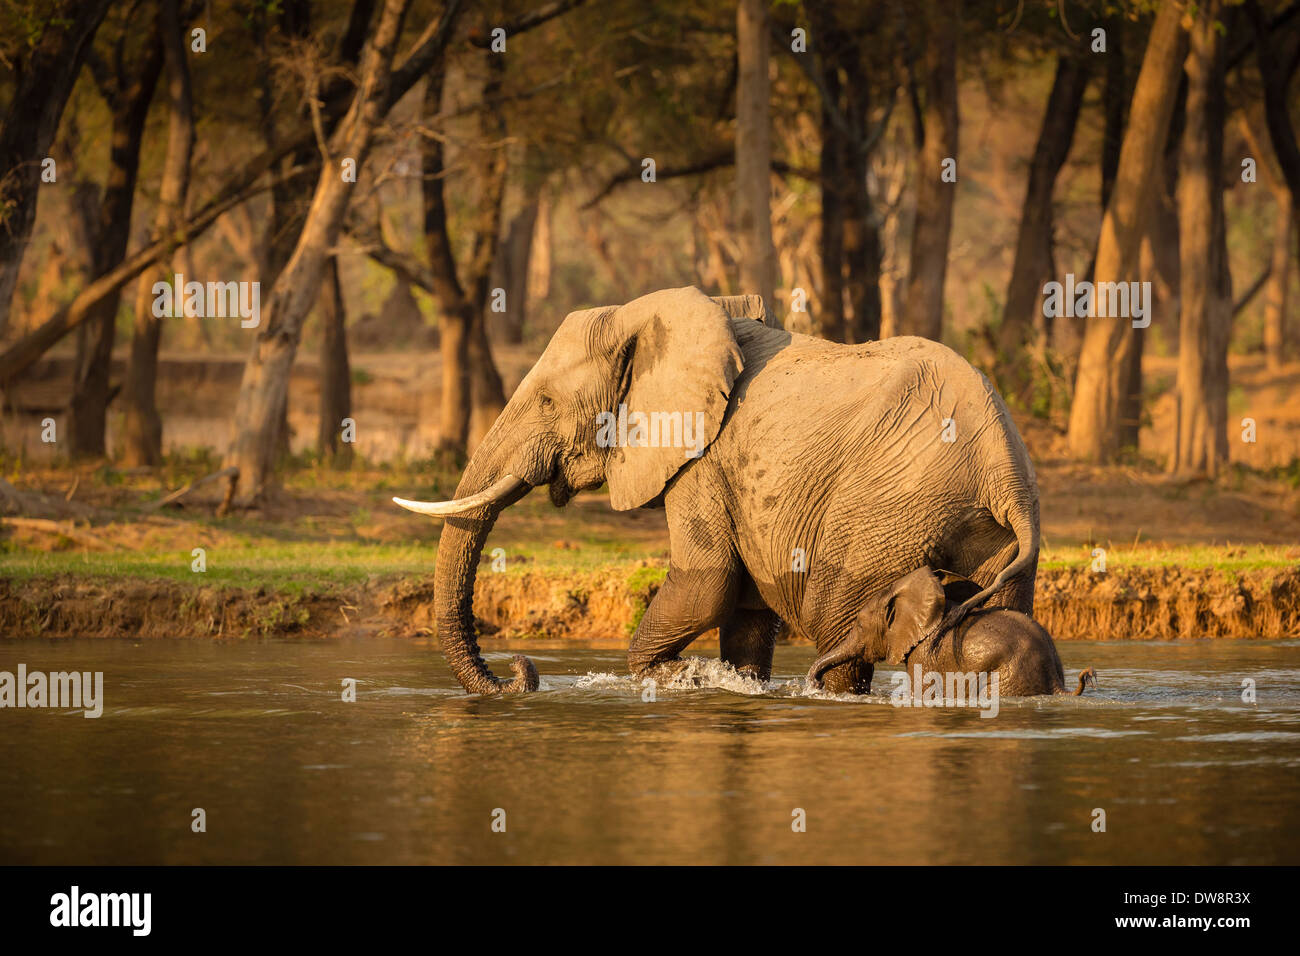 Zambia, Lower Zambezi National Park, l'elefante africano (Loxodonta africana) madre e vitello attraversando l'acqua. Foto Stock